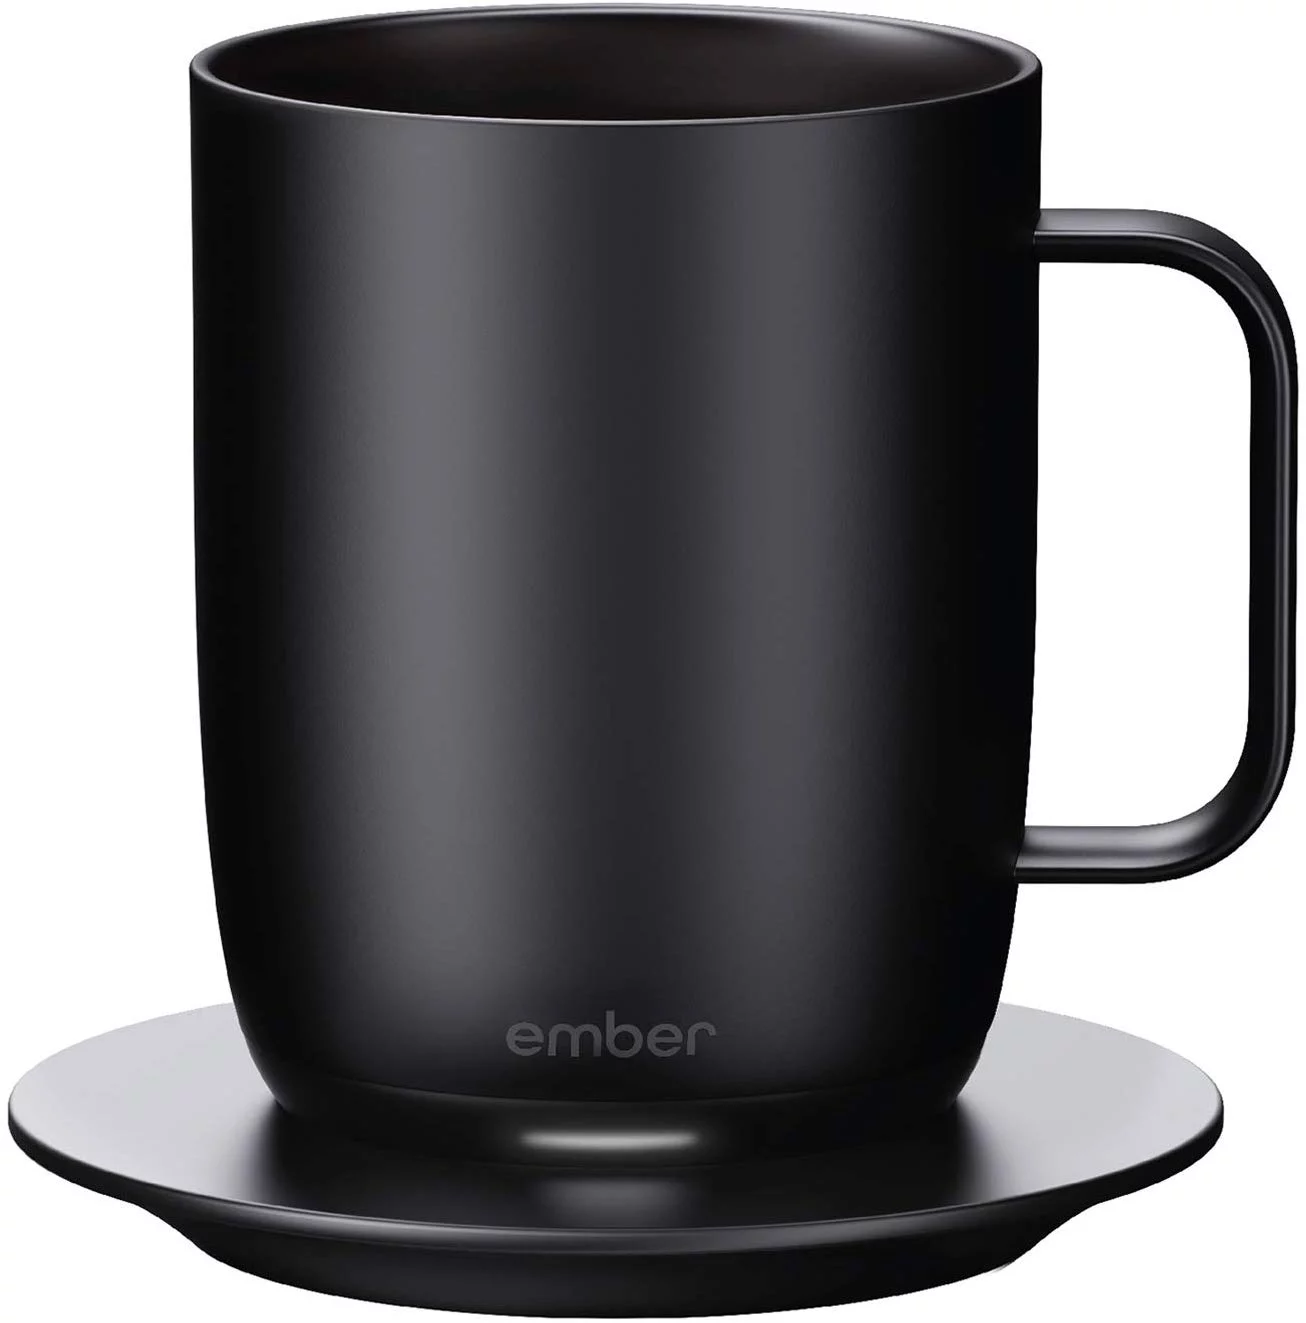 Gifts For Coffee Lovers 2022: Ember Smart Mug 2022